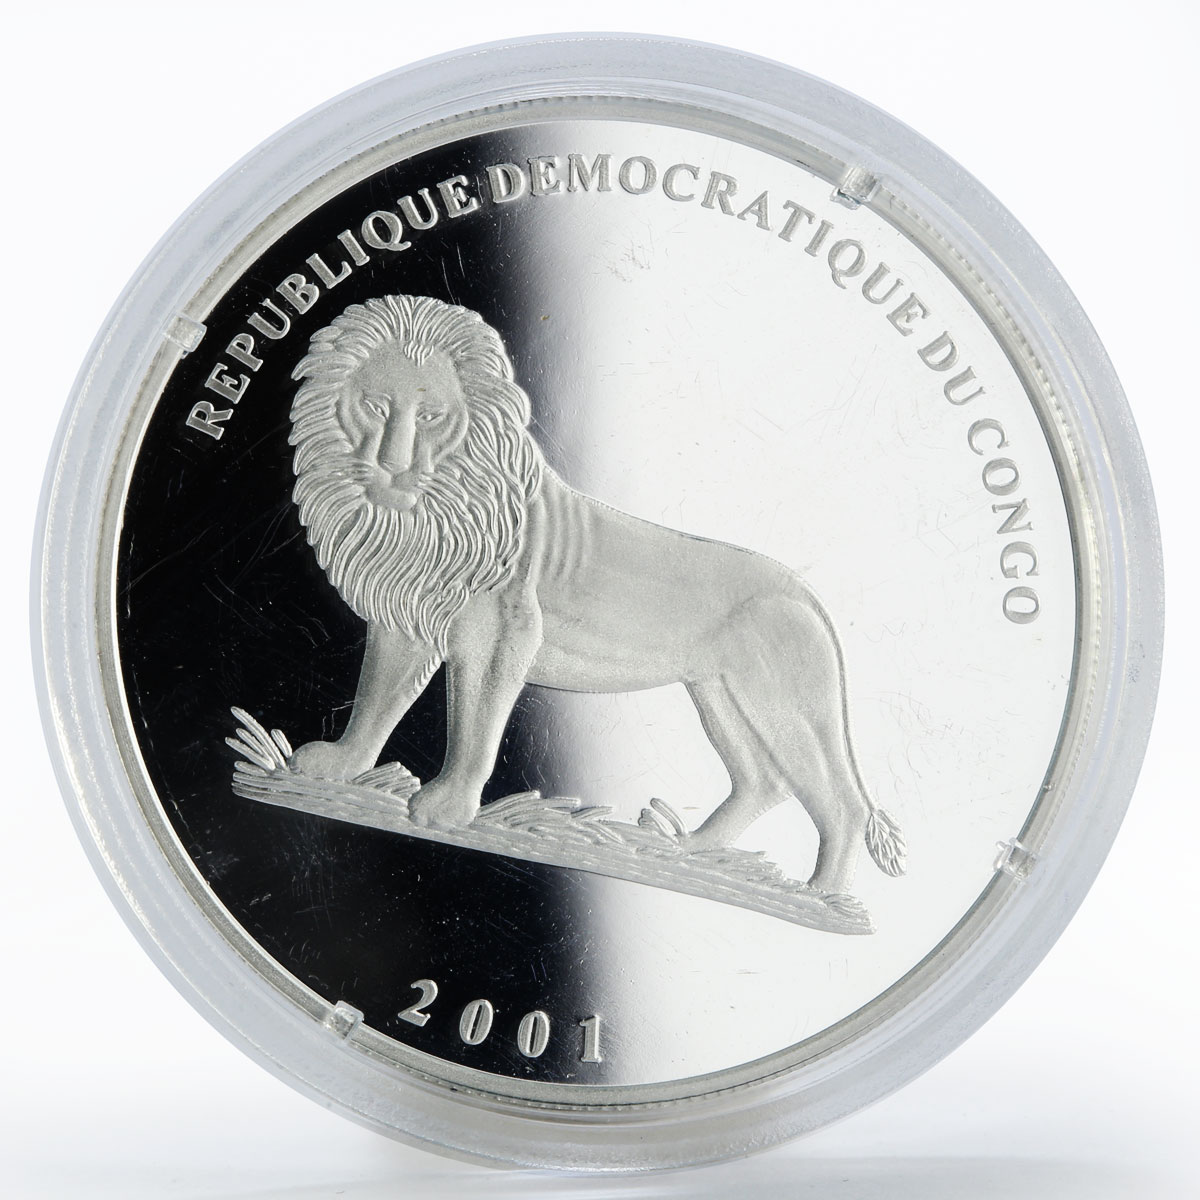 Congo 10 francs Ship R.M.S Aquitania silver proof coin 2001